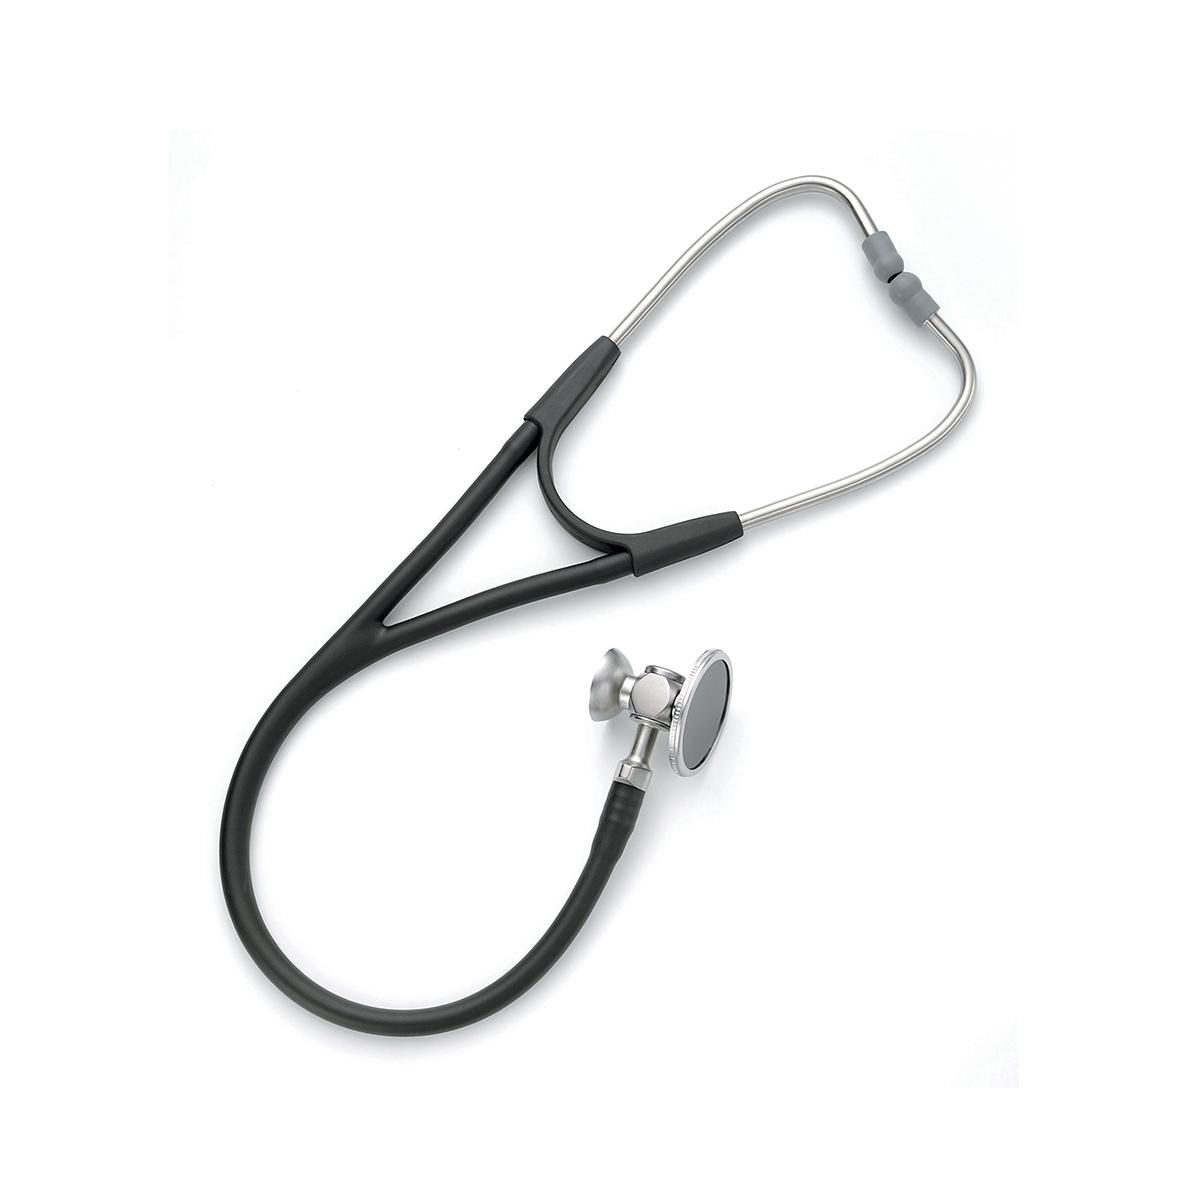 Harvey DLX-stetoskop, ovanifr&aring;n, ett huvud